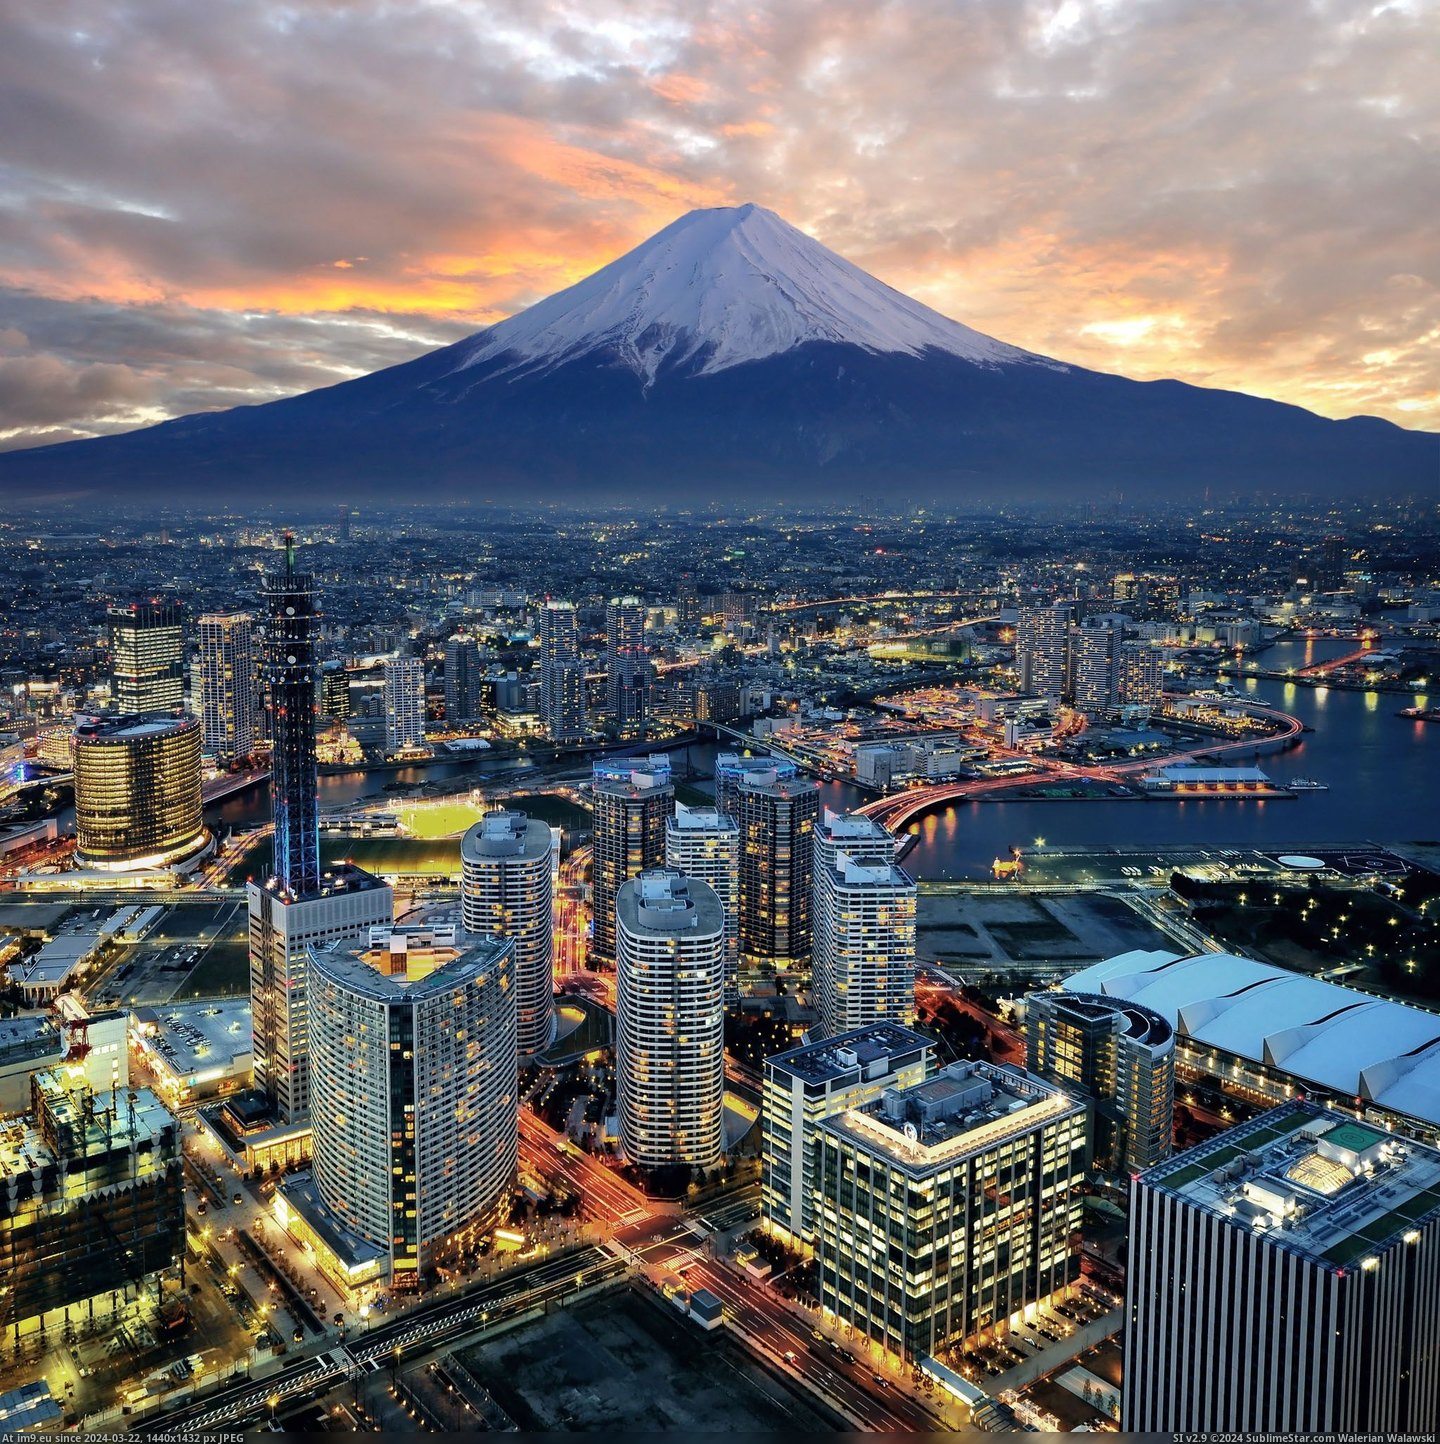 #Fuji #Yokohama #Overlooking [Pics] Mt. Fuji overlooking Yokohama Pic. (Bild von album My r/PICS favs))